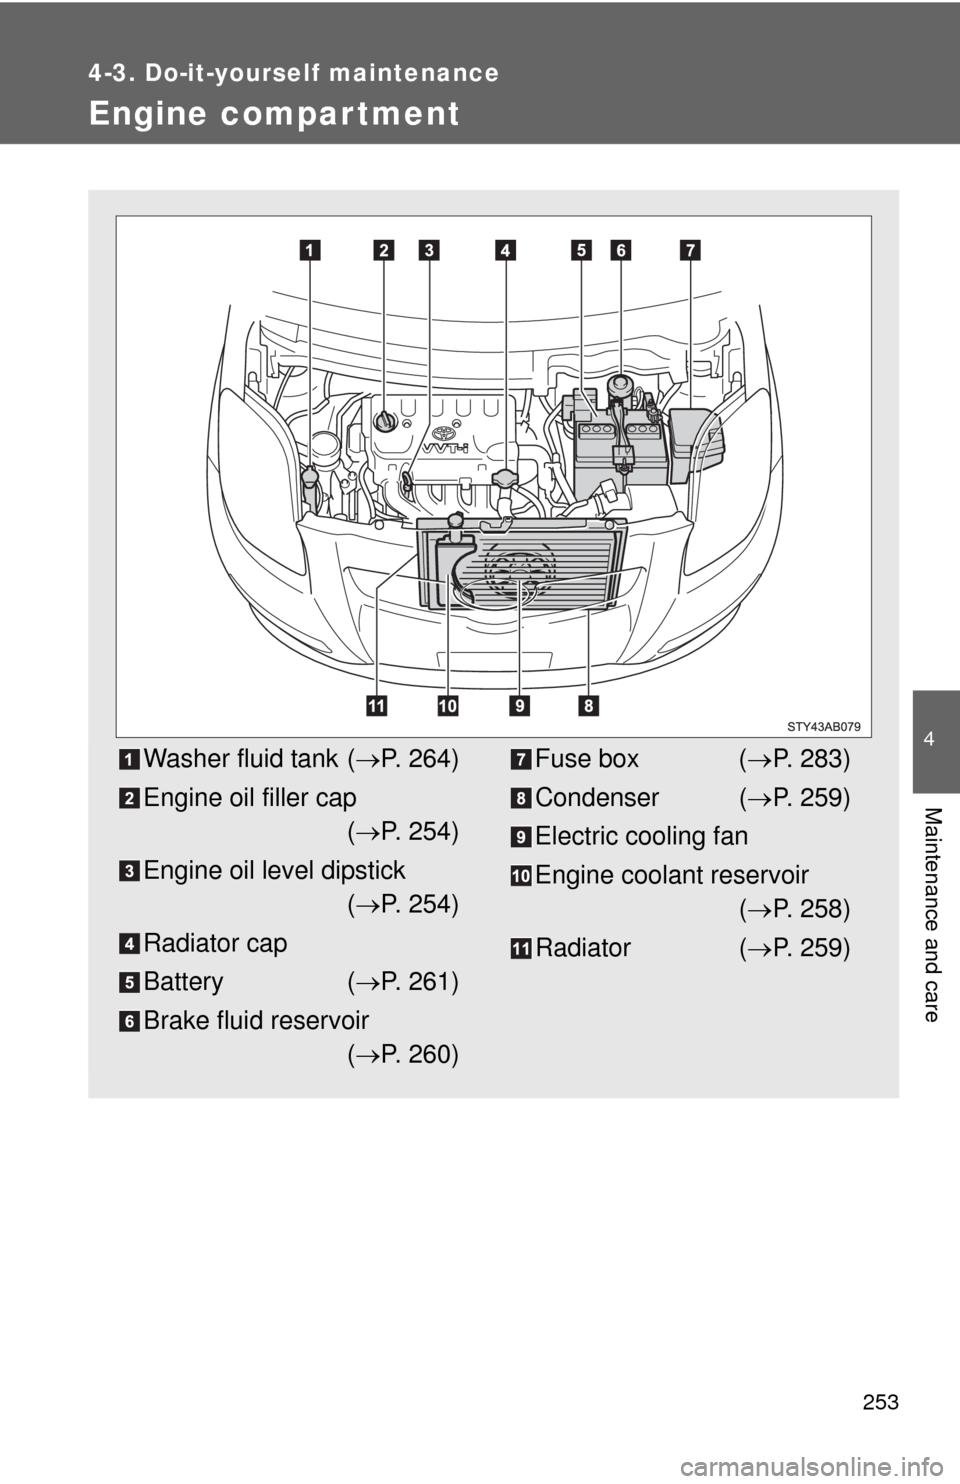 TOYOTA YARIS 2010 3.G User Guide 253
4-3. Do-it-yourself maintenance
4
Maintenance and care
Engine compar tment
Washer fluid tank (P. 264)
Engine oil filler cap
(P. 254)
Engine oil level dipstick
(P. 254)
Radiator cap
Batter